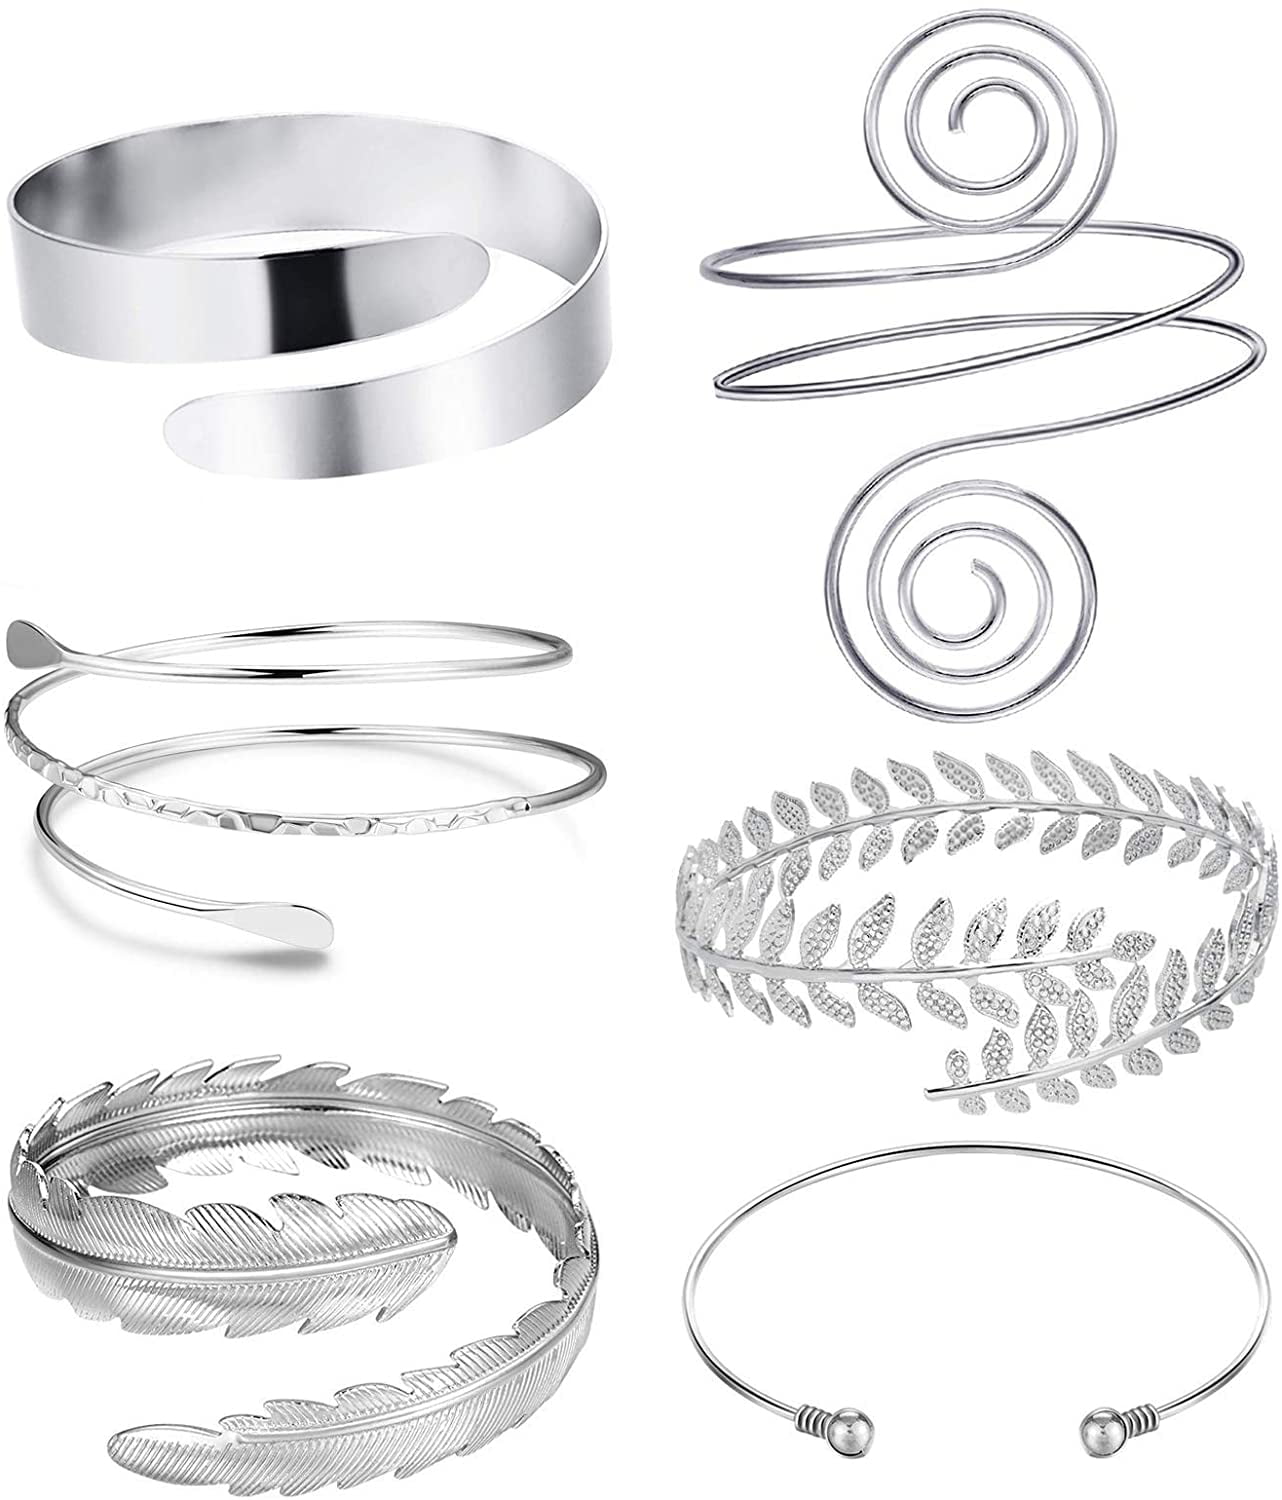 Silver cuff arm bracelet with pendants - MAM